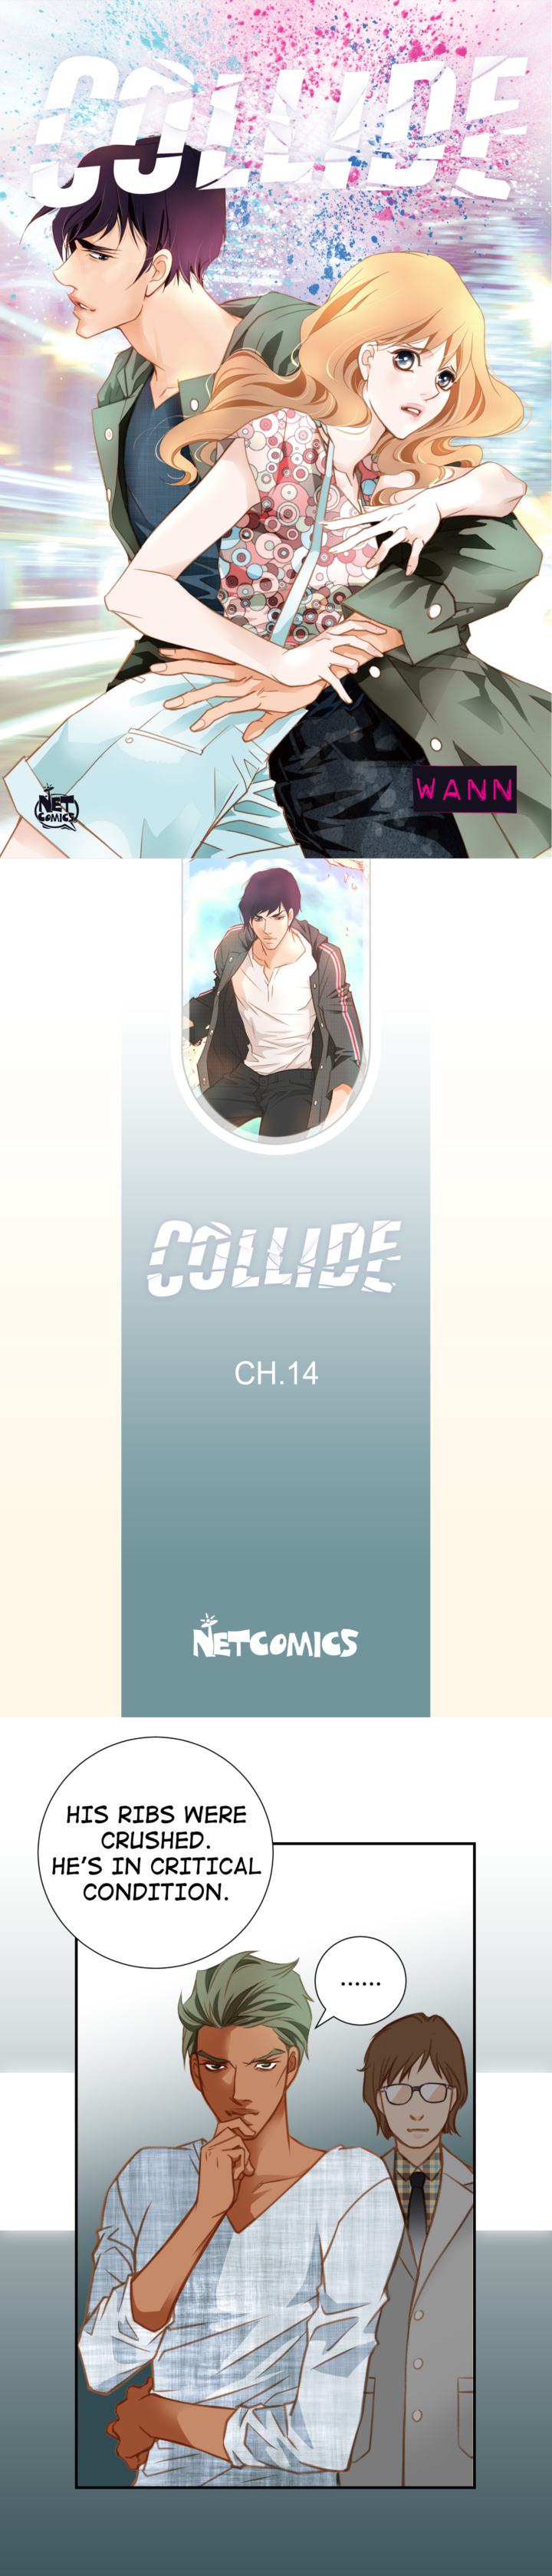 Collide Ch.14